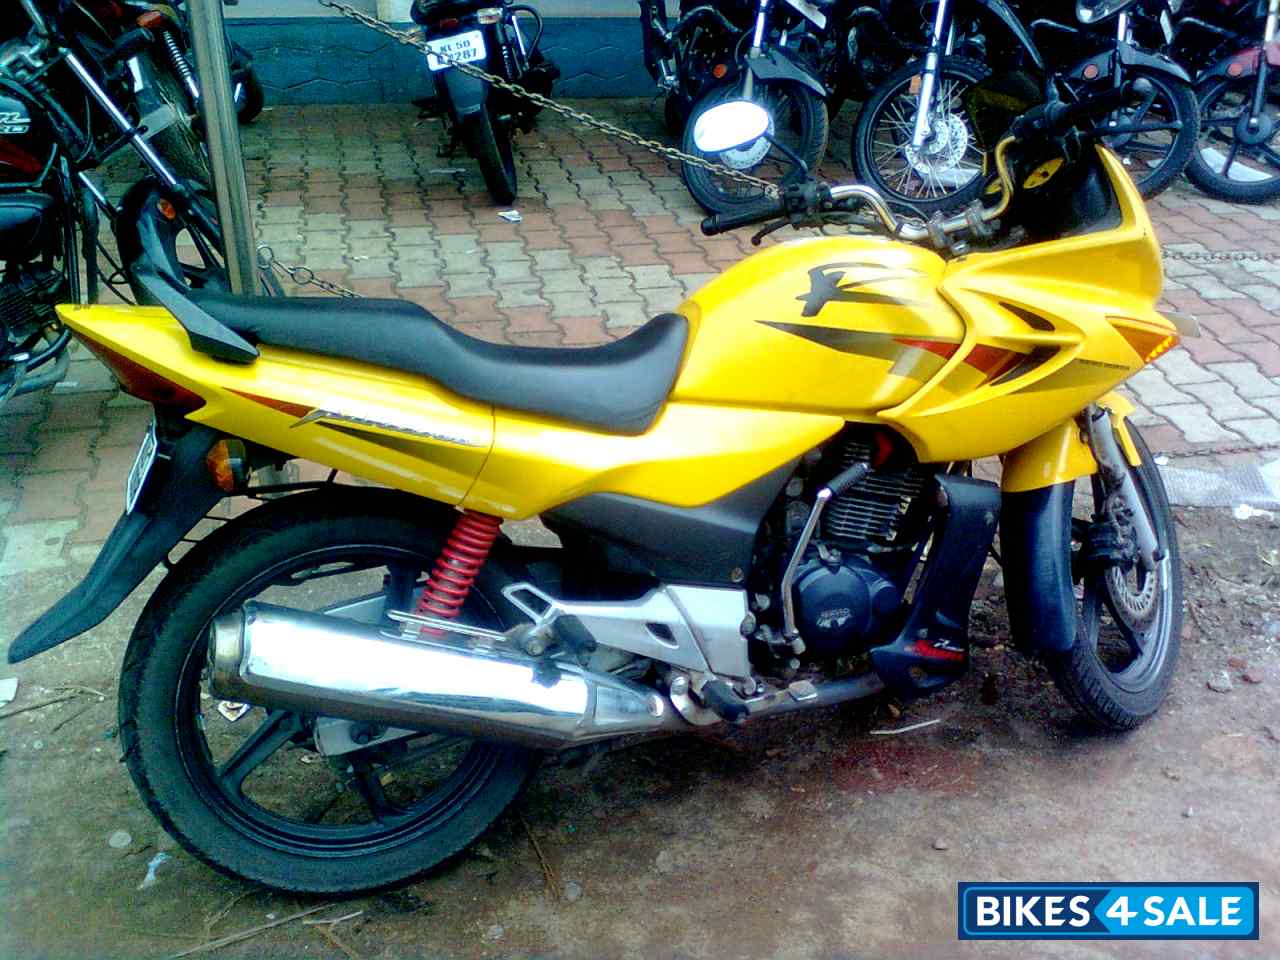 Used 08 Model Hero Karizma R For Sale In Malappuram Id Yellow Colour Bikes4sale